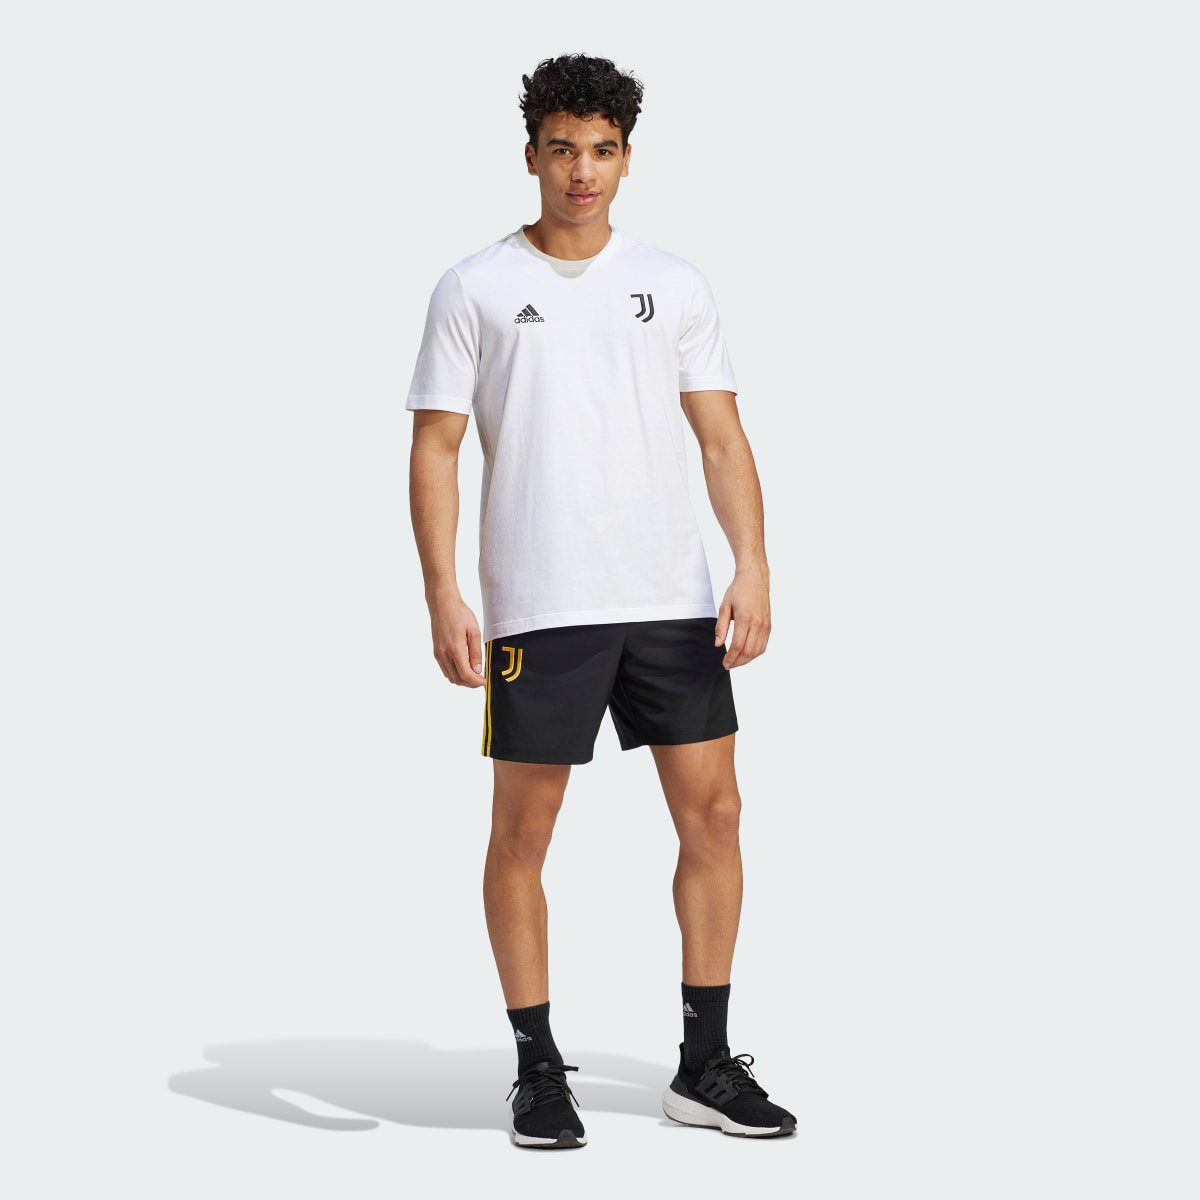 Adidas T-shirt Juventus DNA. 6